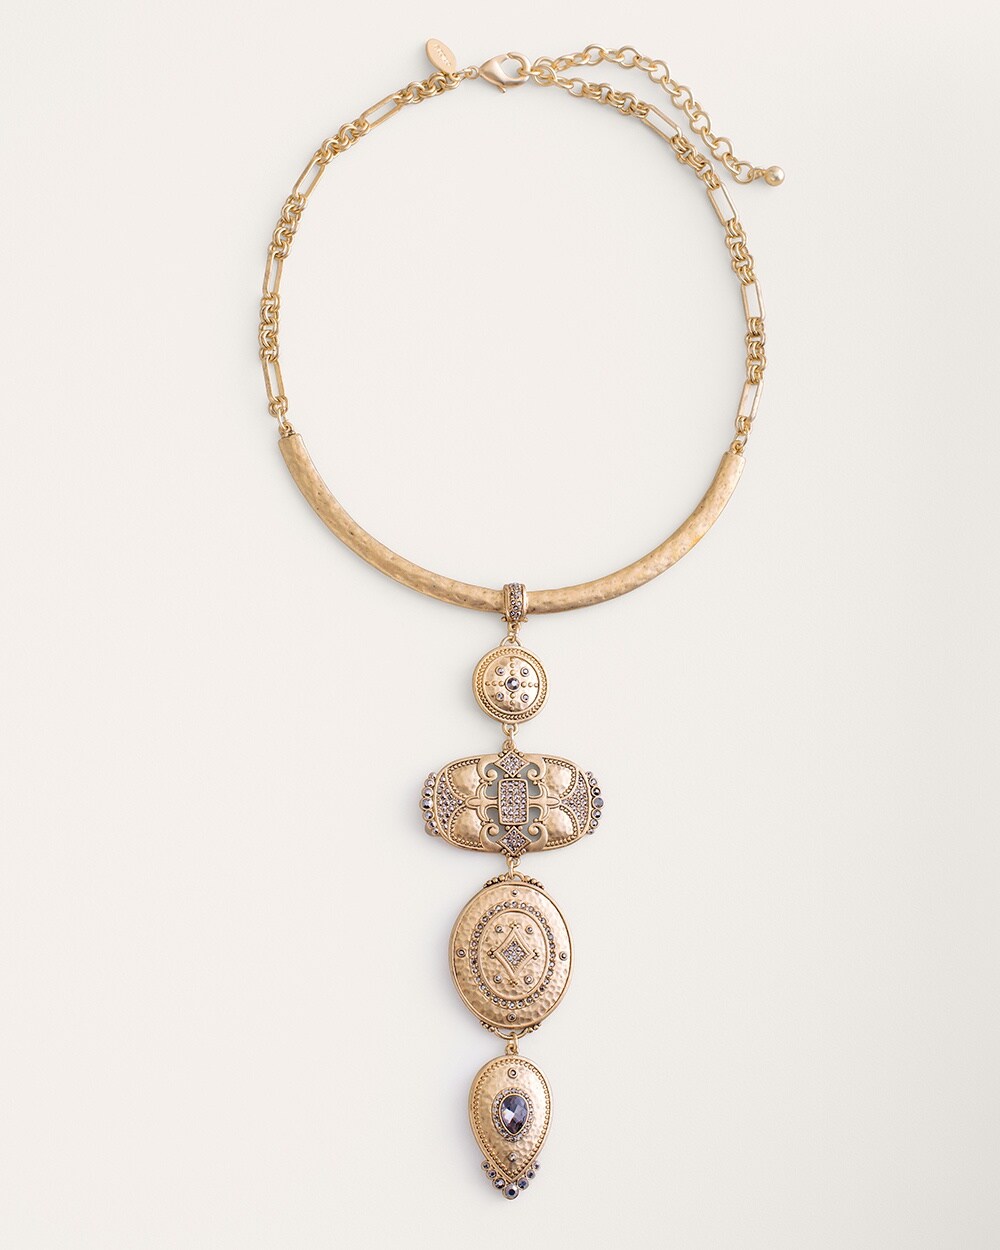 Ornate Goldtone Bib Necklace